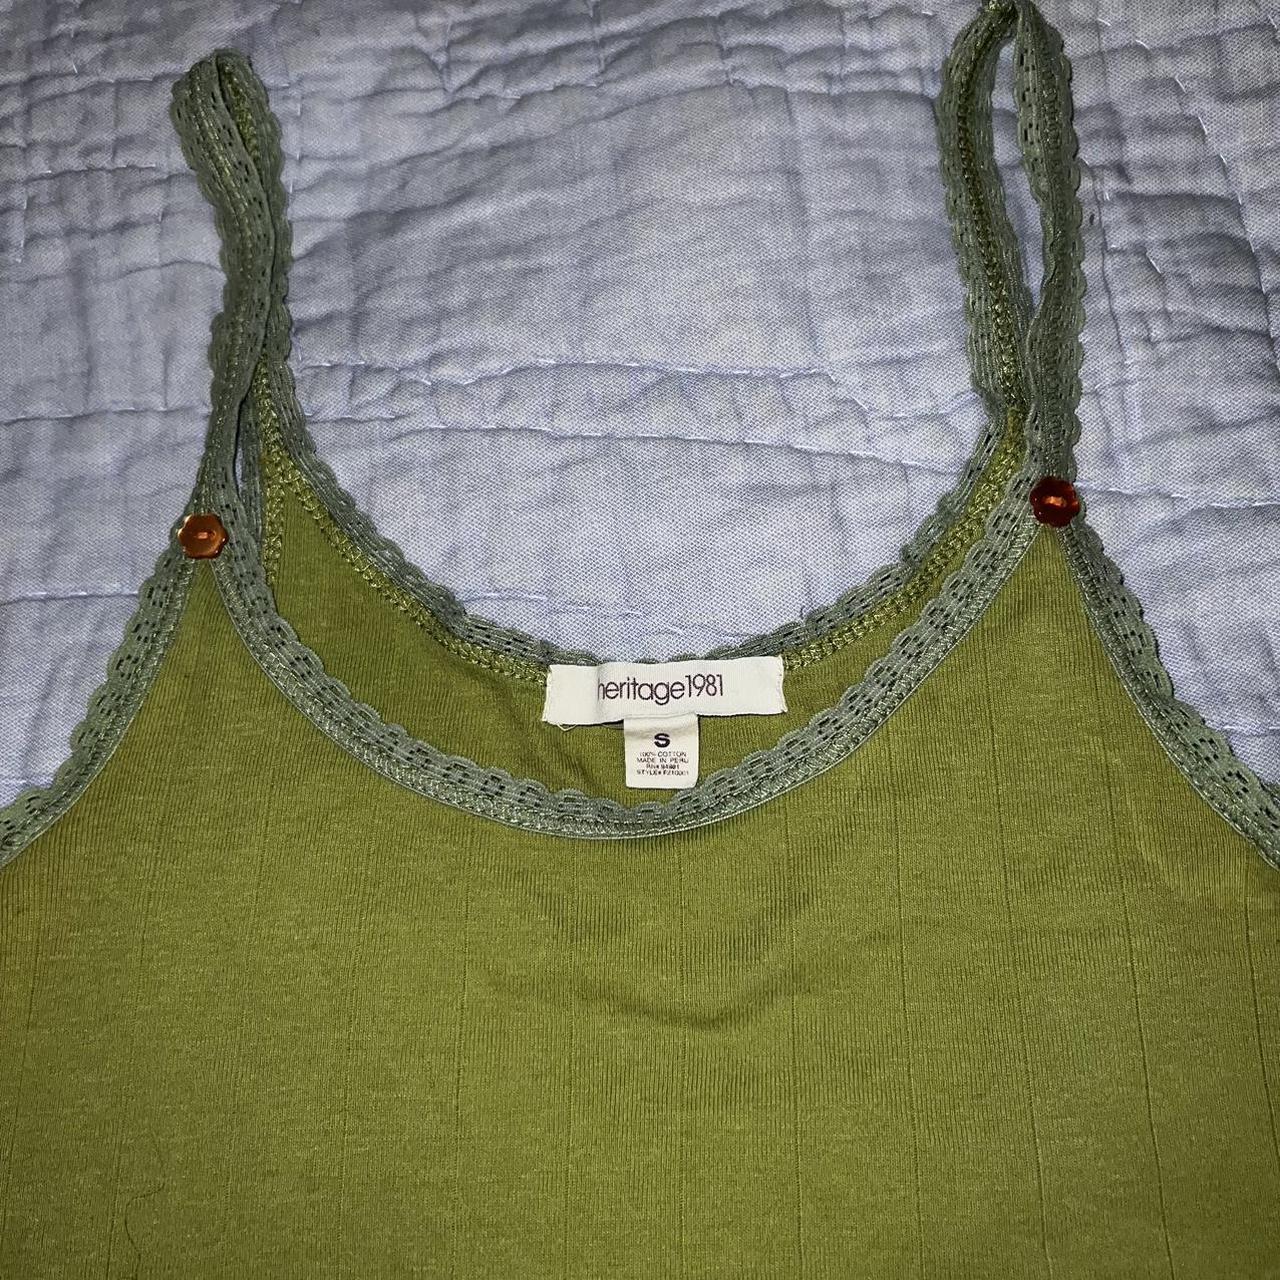 American Heritage Textiles Women's Khaki Vest (2)